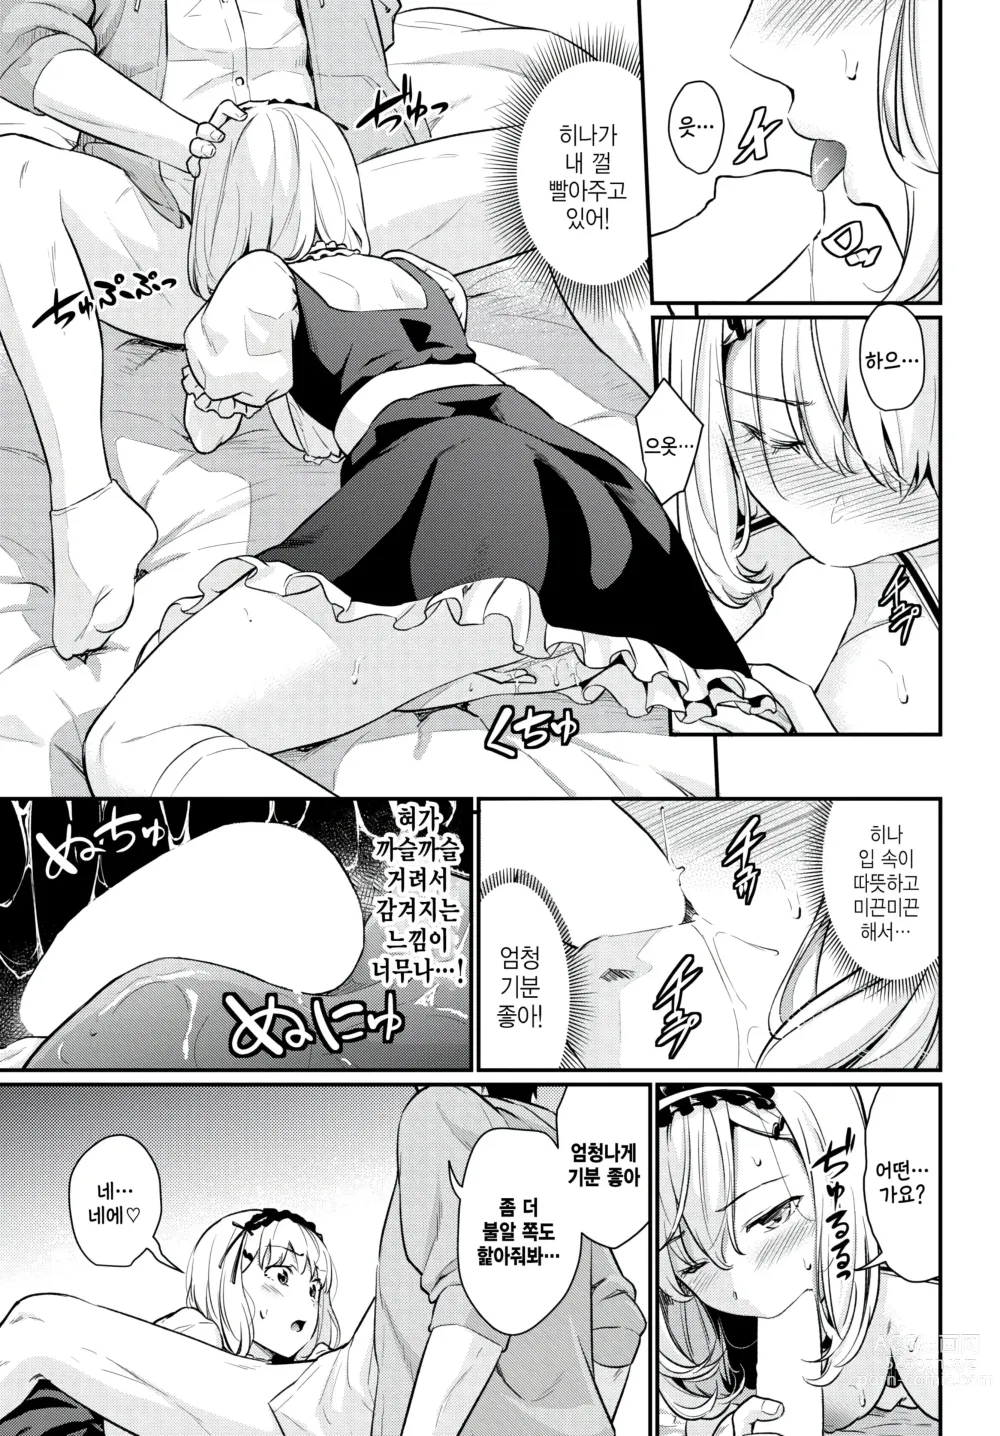 Page 7 of manga Maid Training